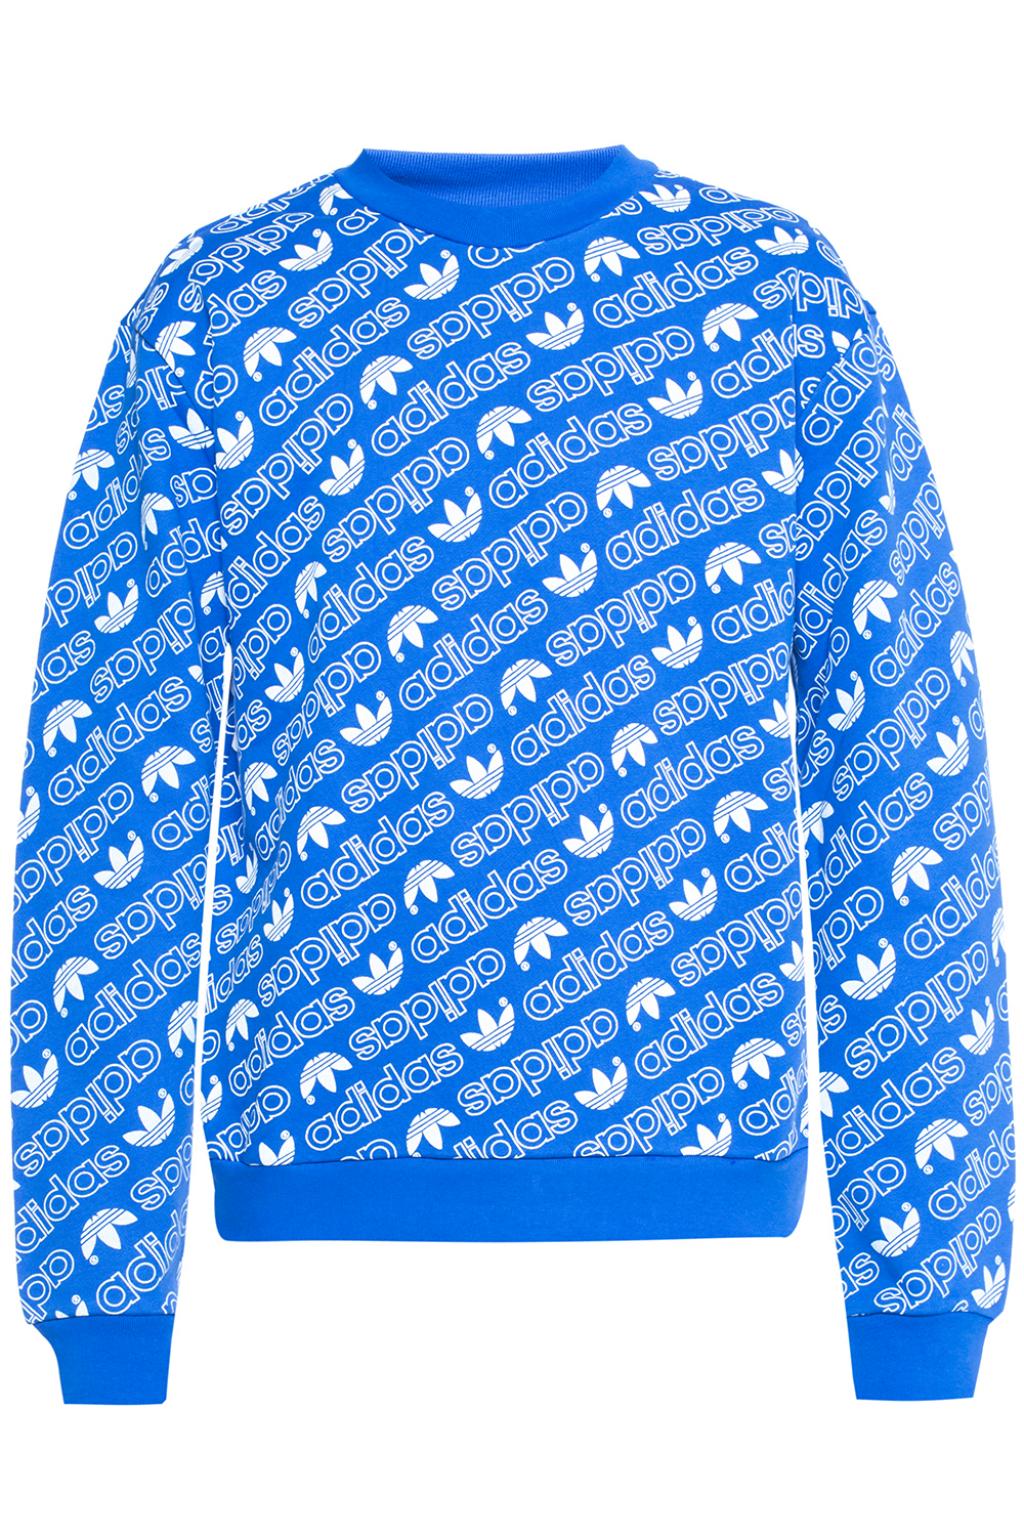 adidas printed sweatshirt